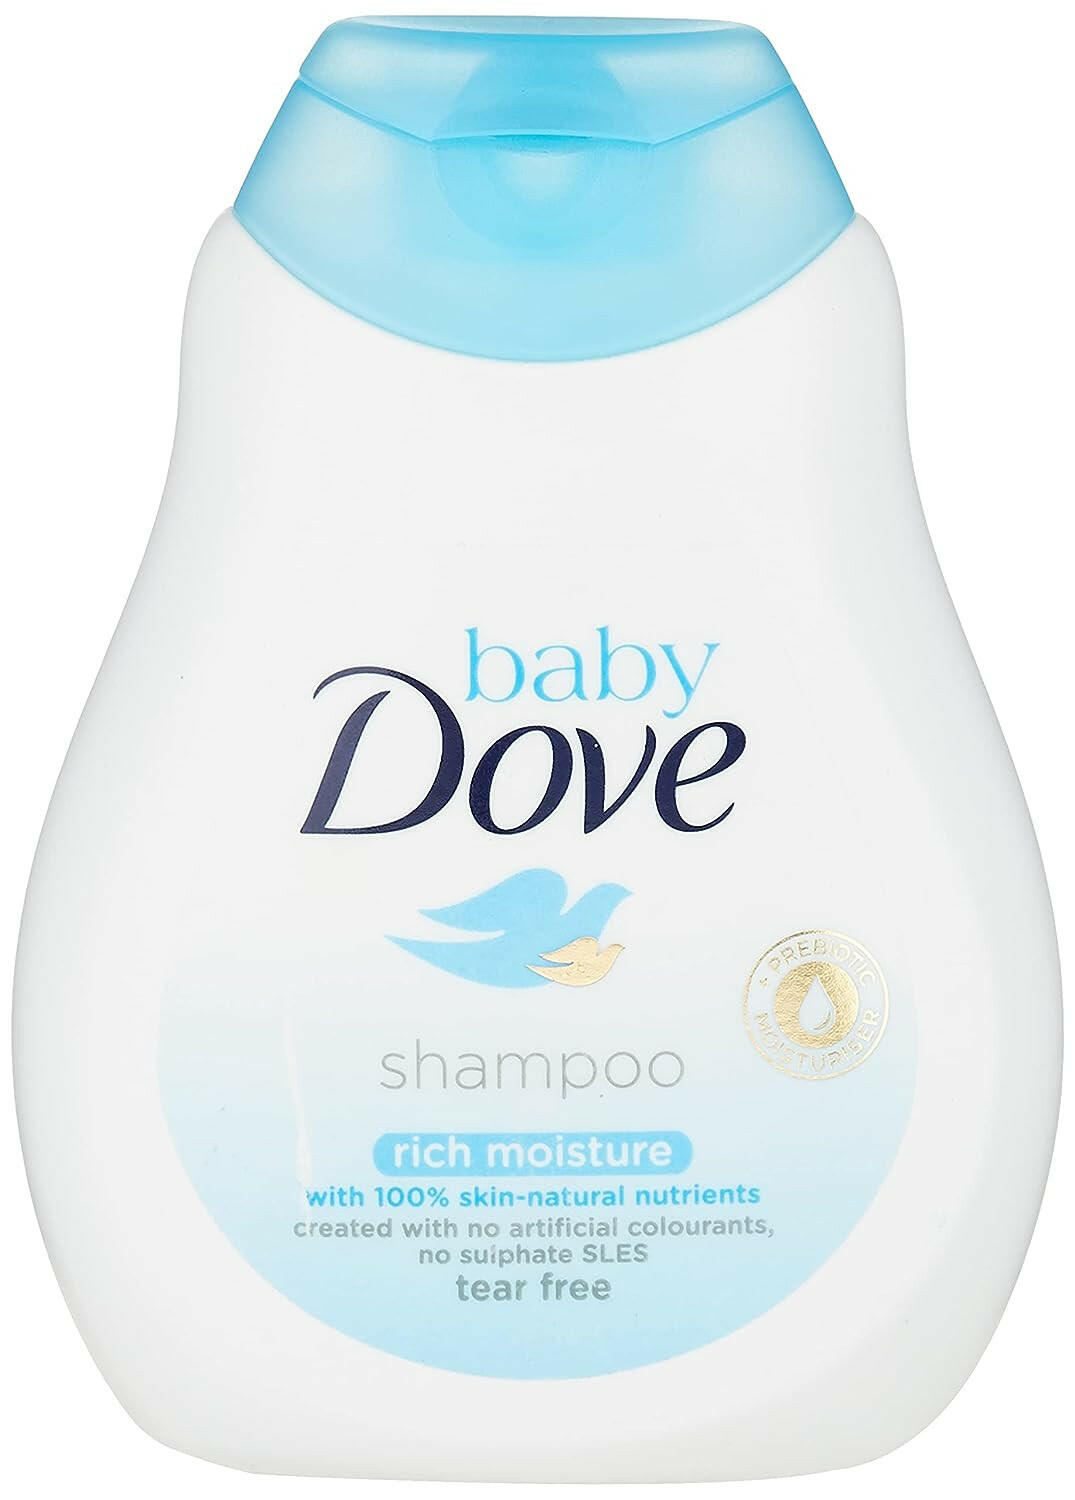 Dove Baby Shampoo Rich Moisture 6.76oz